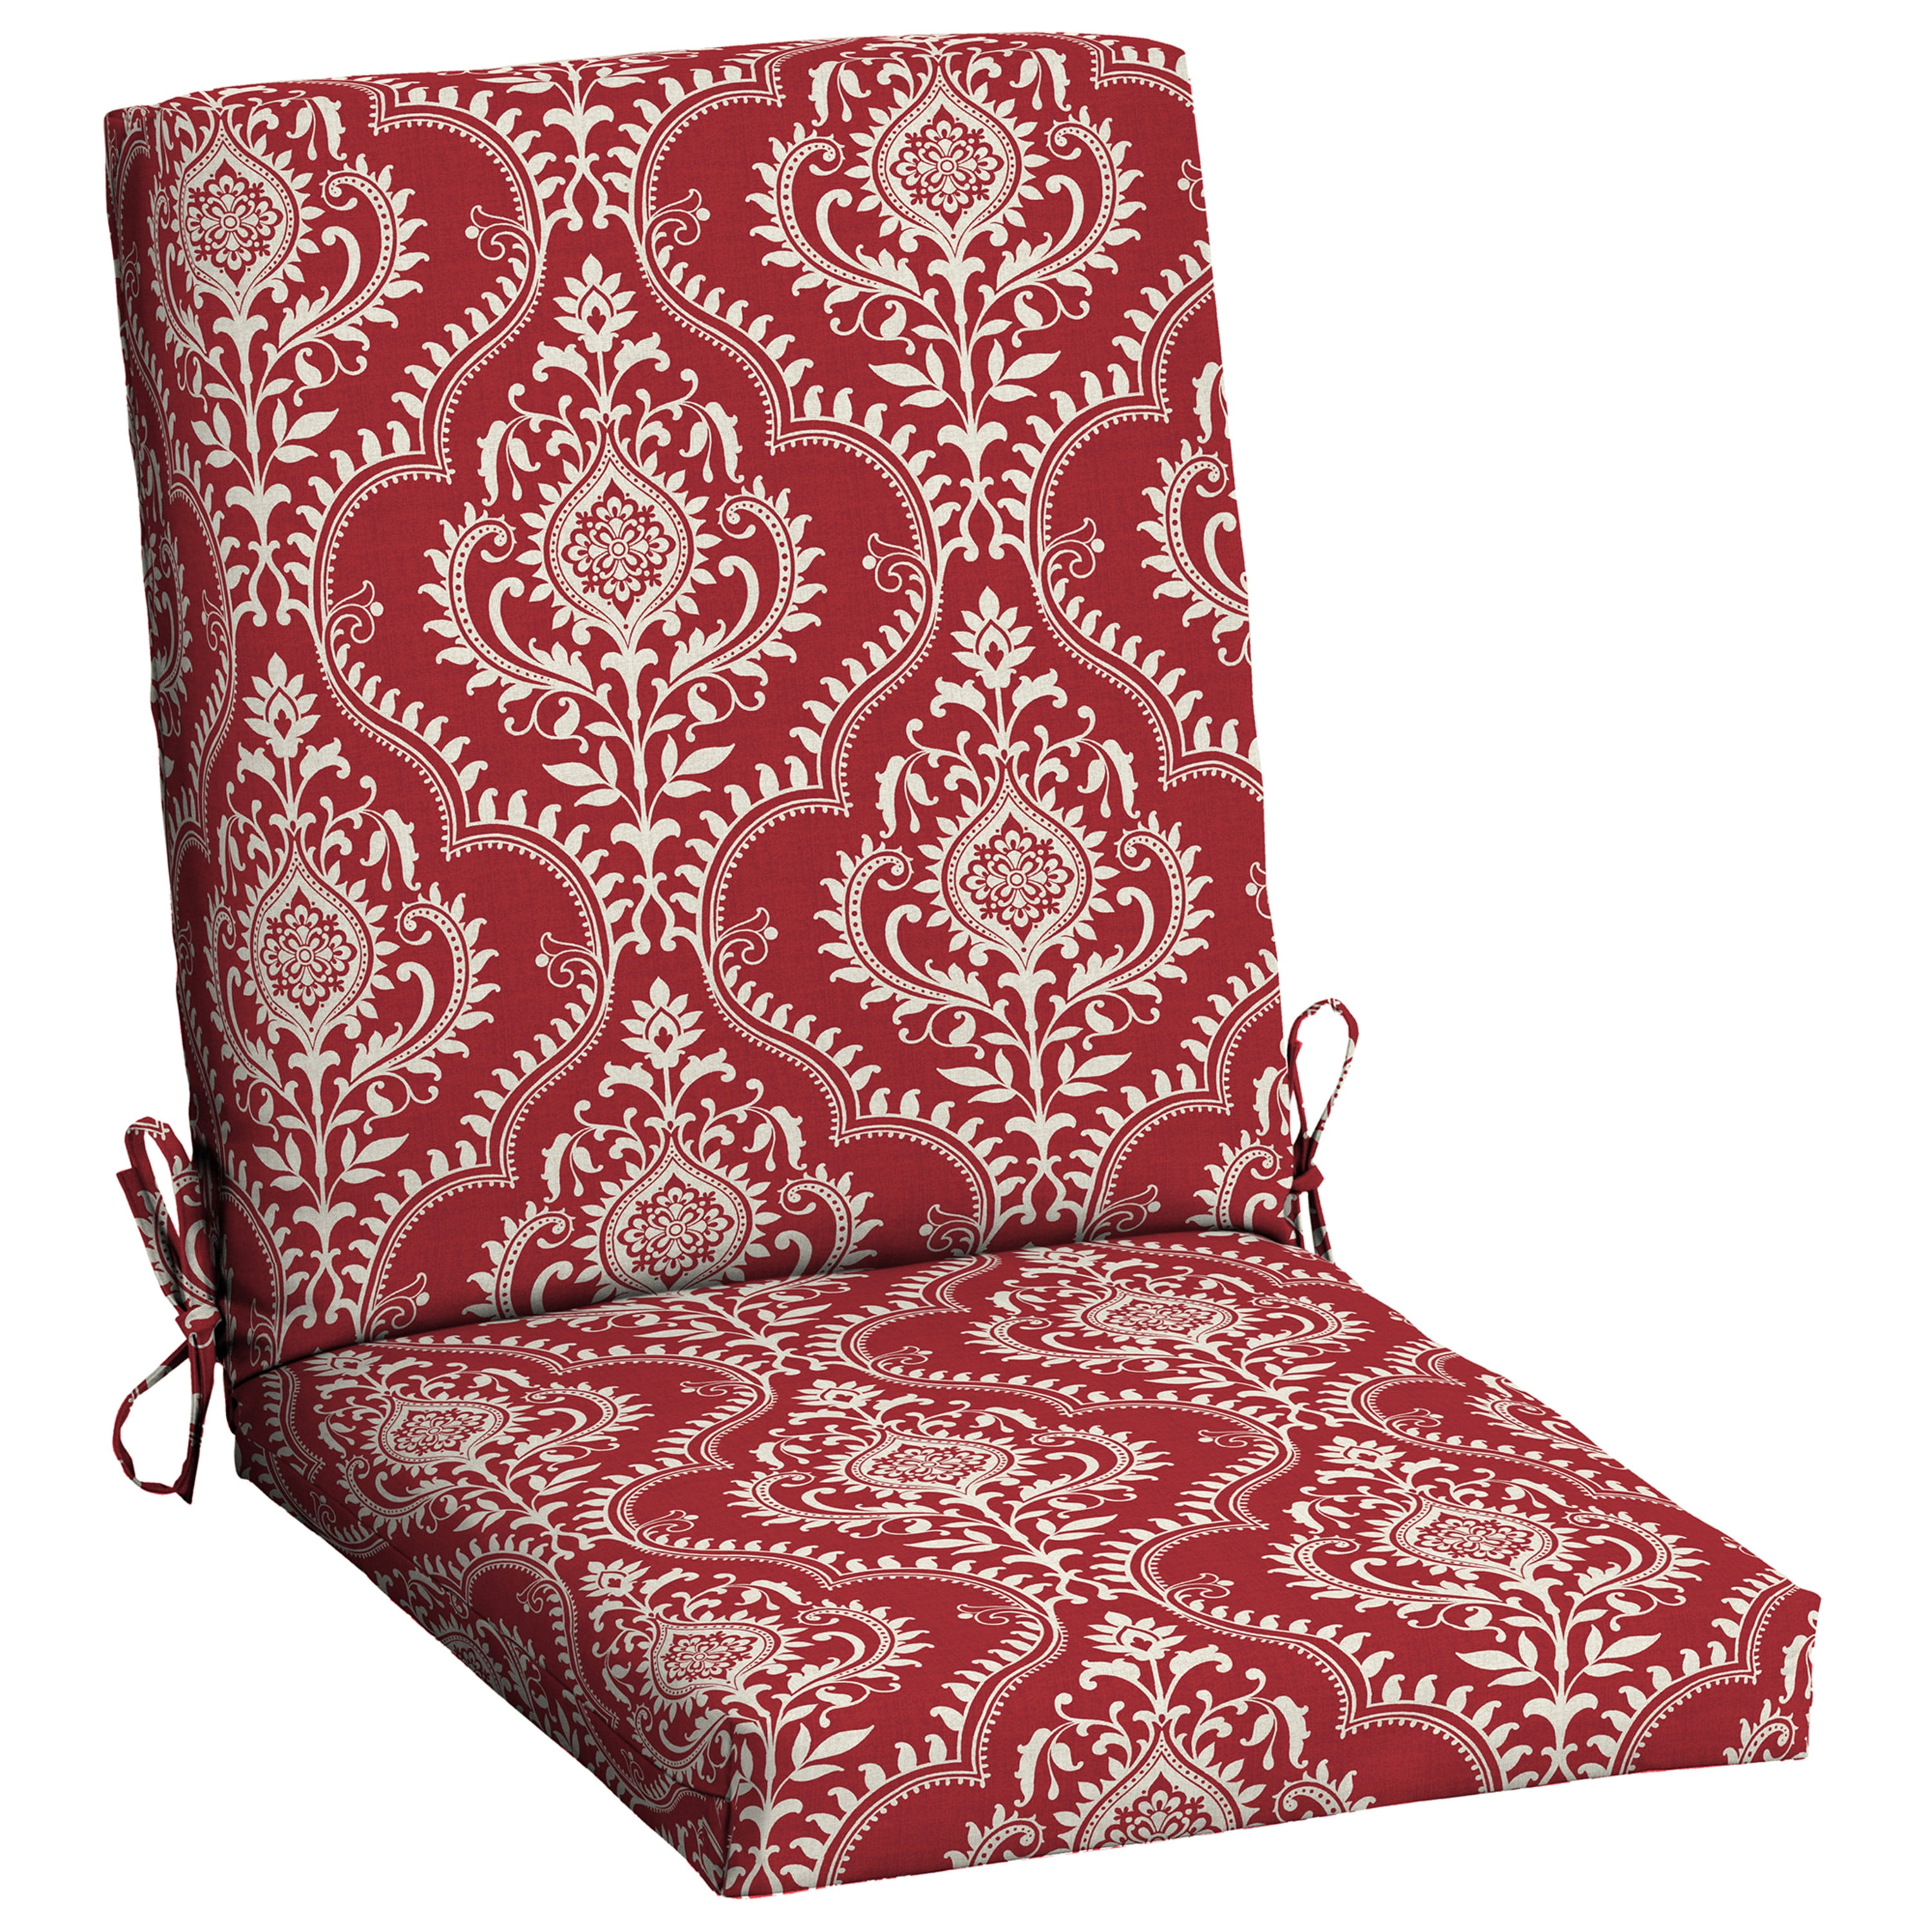 Mainstays 43 x 20 Red Medallion Rectangle Patio Chair Cushion, 1